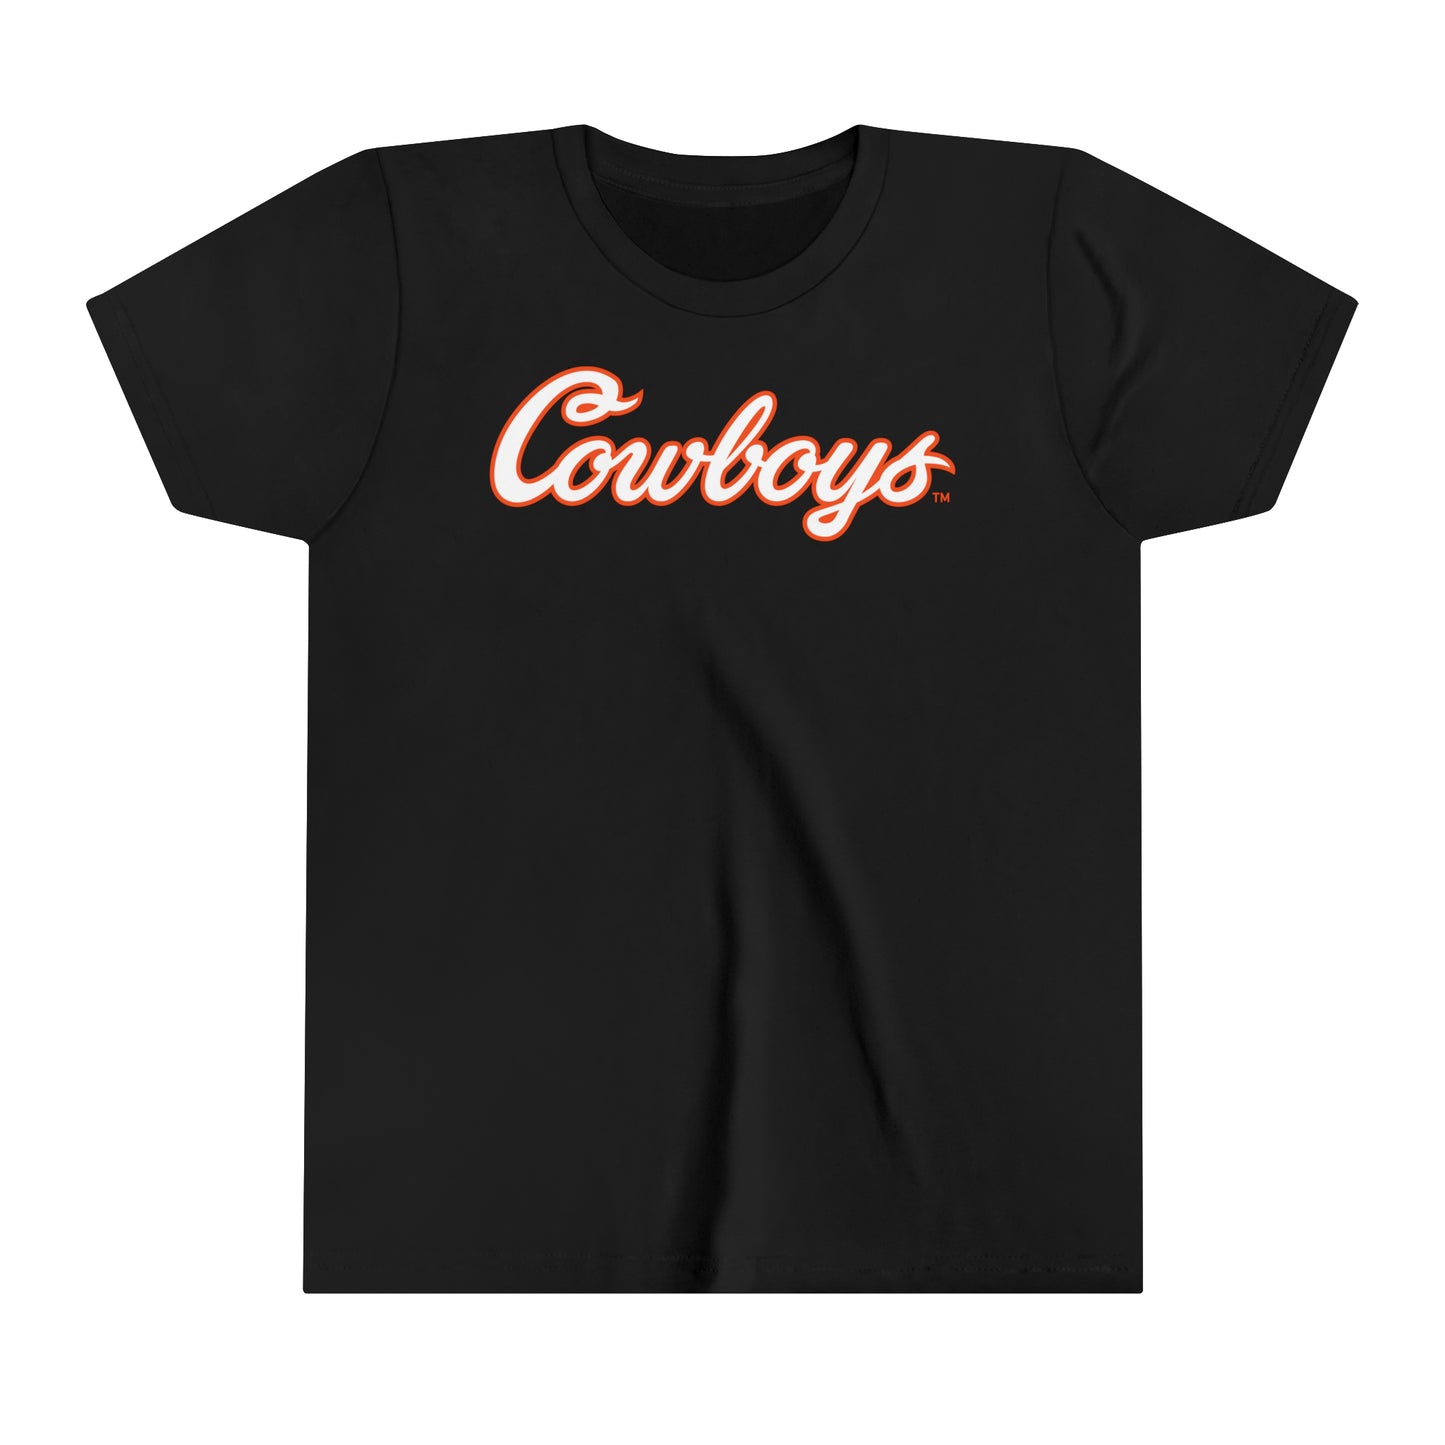 Mike Marsh #32 Cursive Cowboys Youth T-Shirt